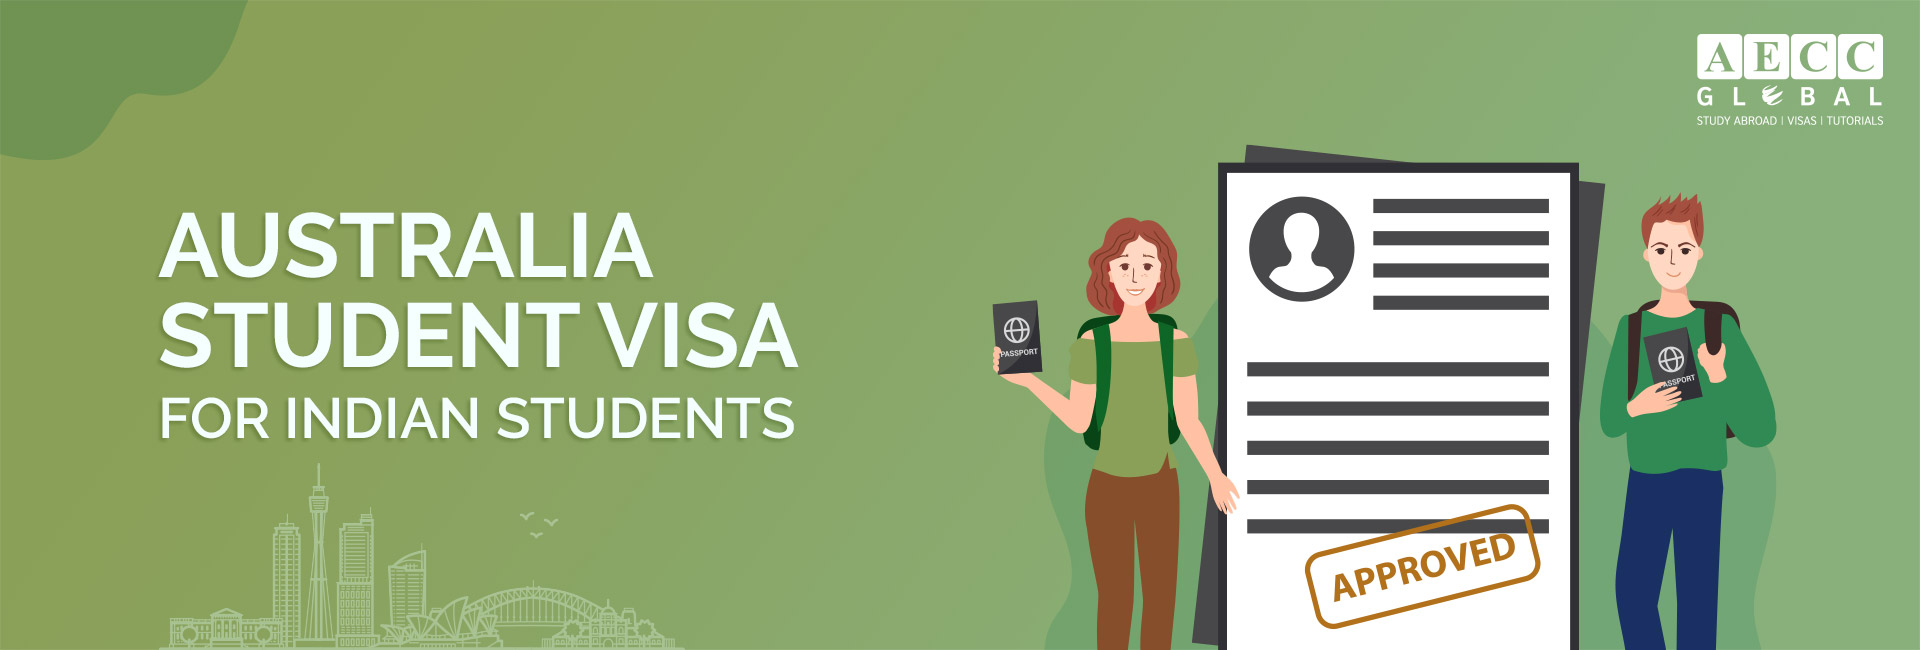 Australia Student Visa from India